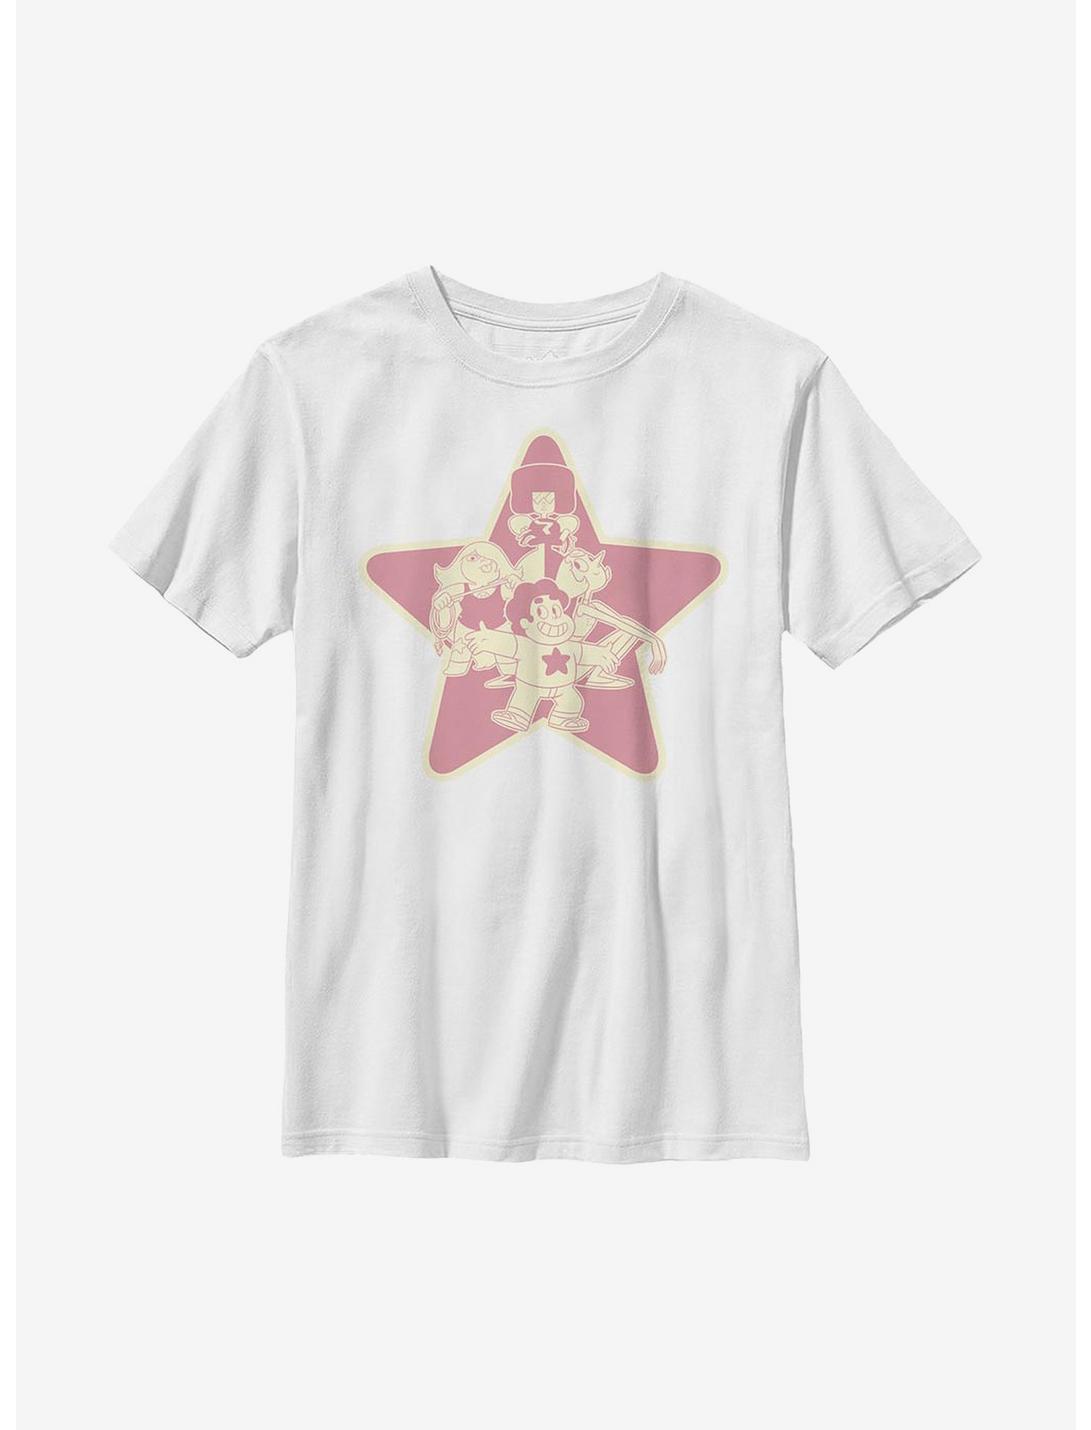 Steven Universe Group Shot Youth T-Shirt, WHITE, hi-res